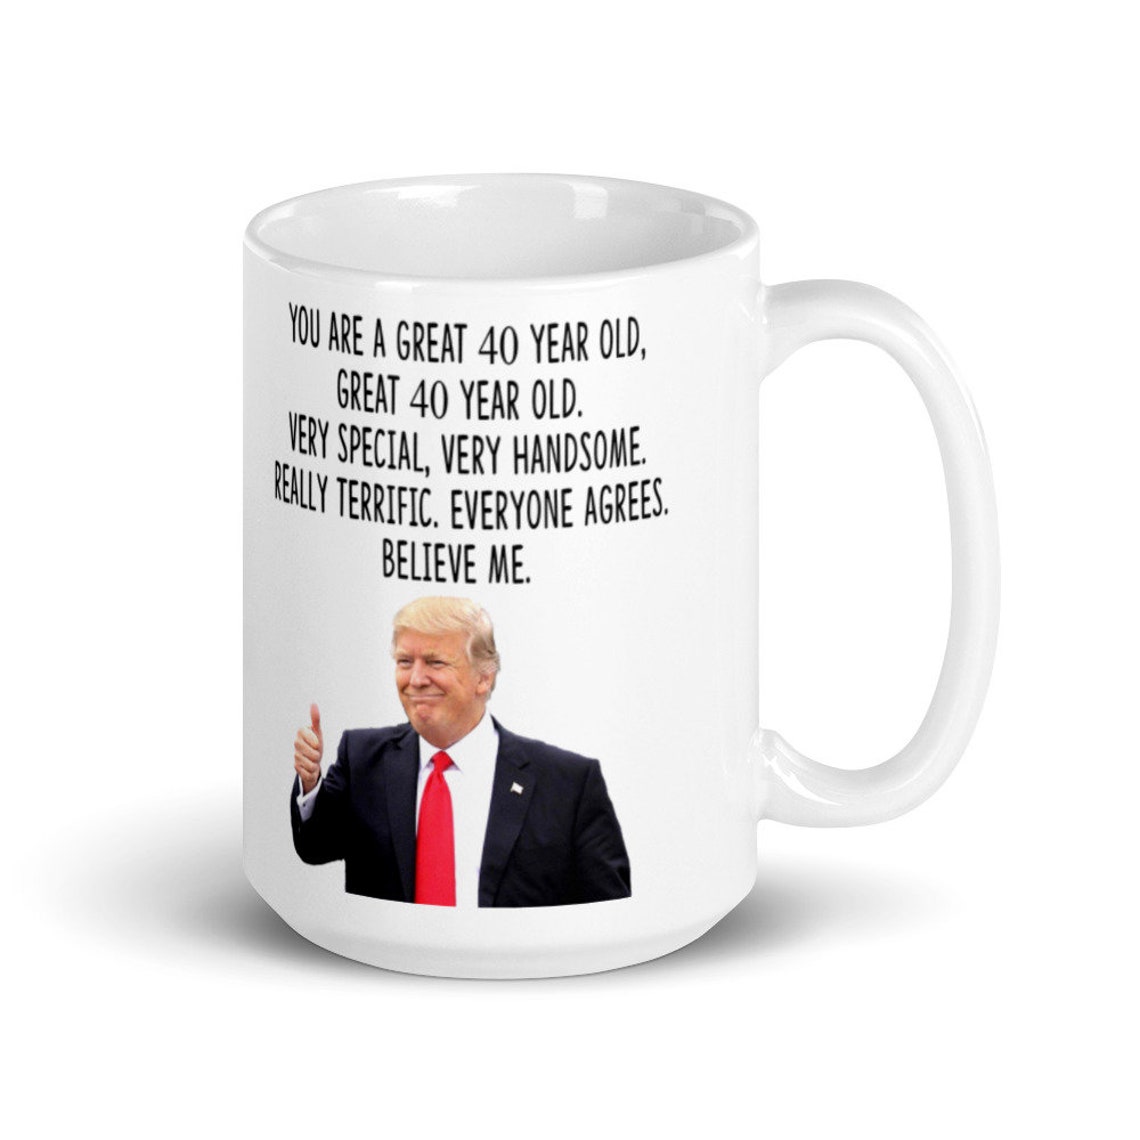 Trump 40 Year Old Woman Gift Mug Funny Trump 40 Year Old Gift | Etsy